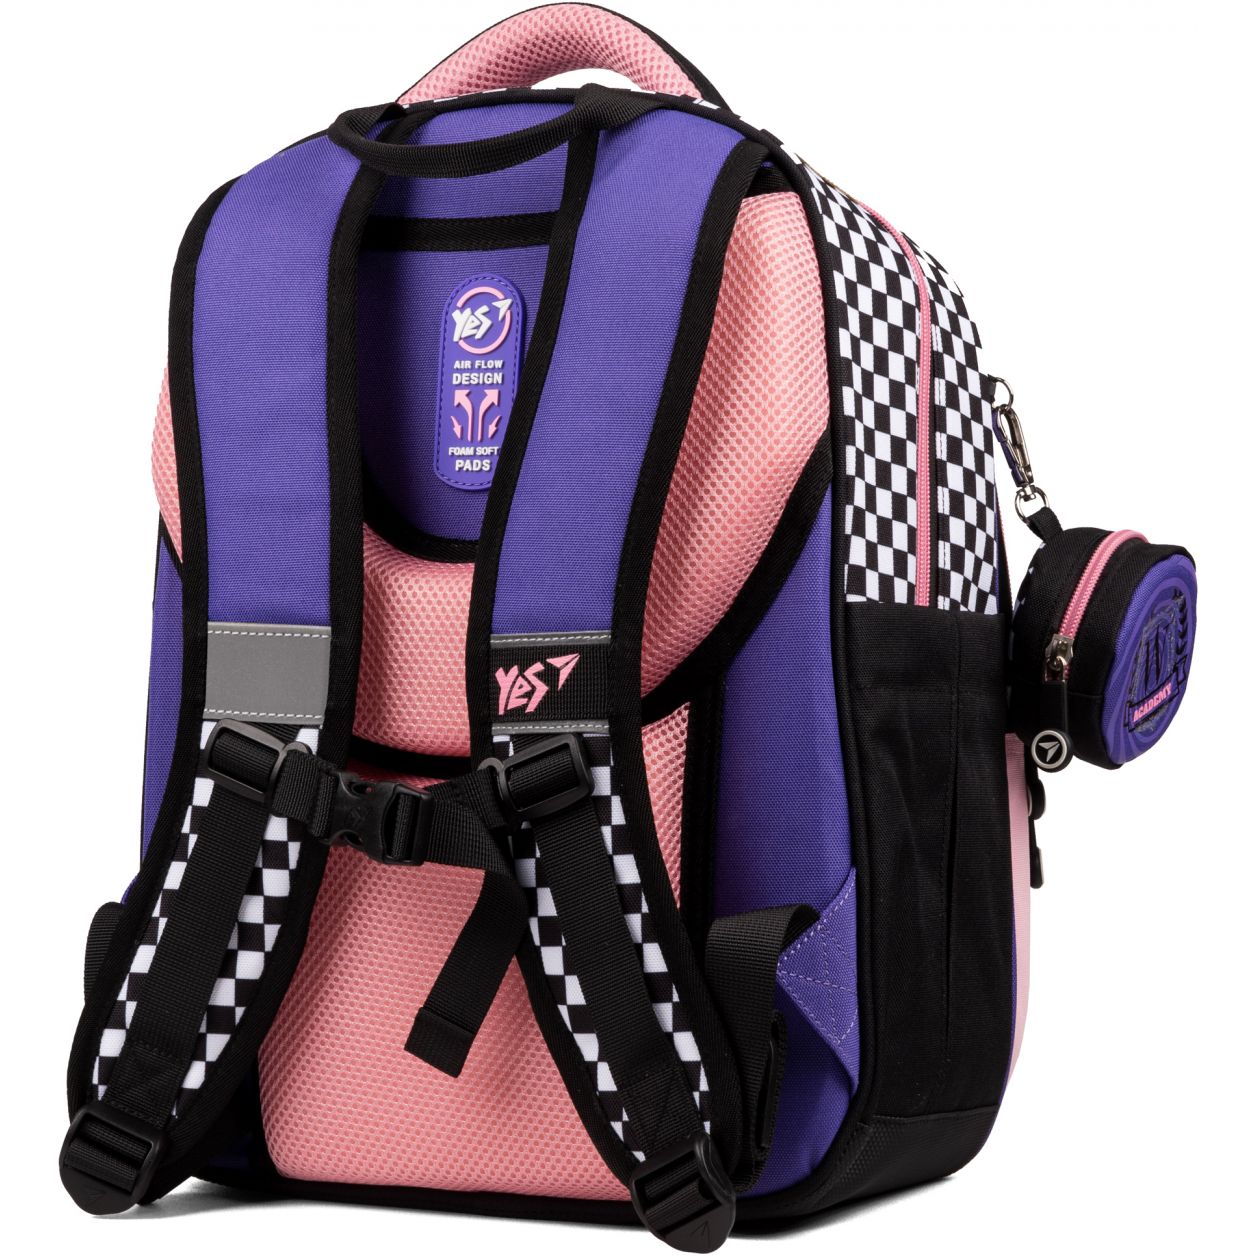 Рюкзак Yes S-91 Collection Academy с пеналом и сумкой (559796) - фото 3